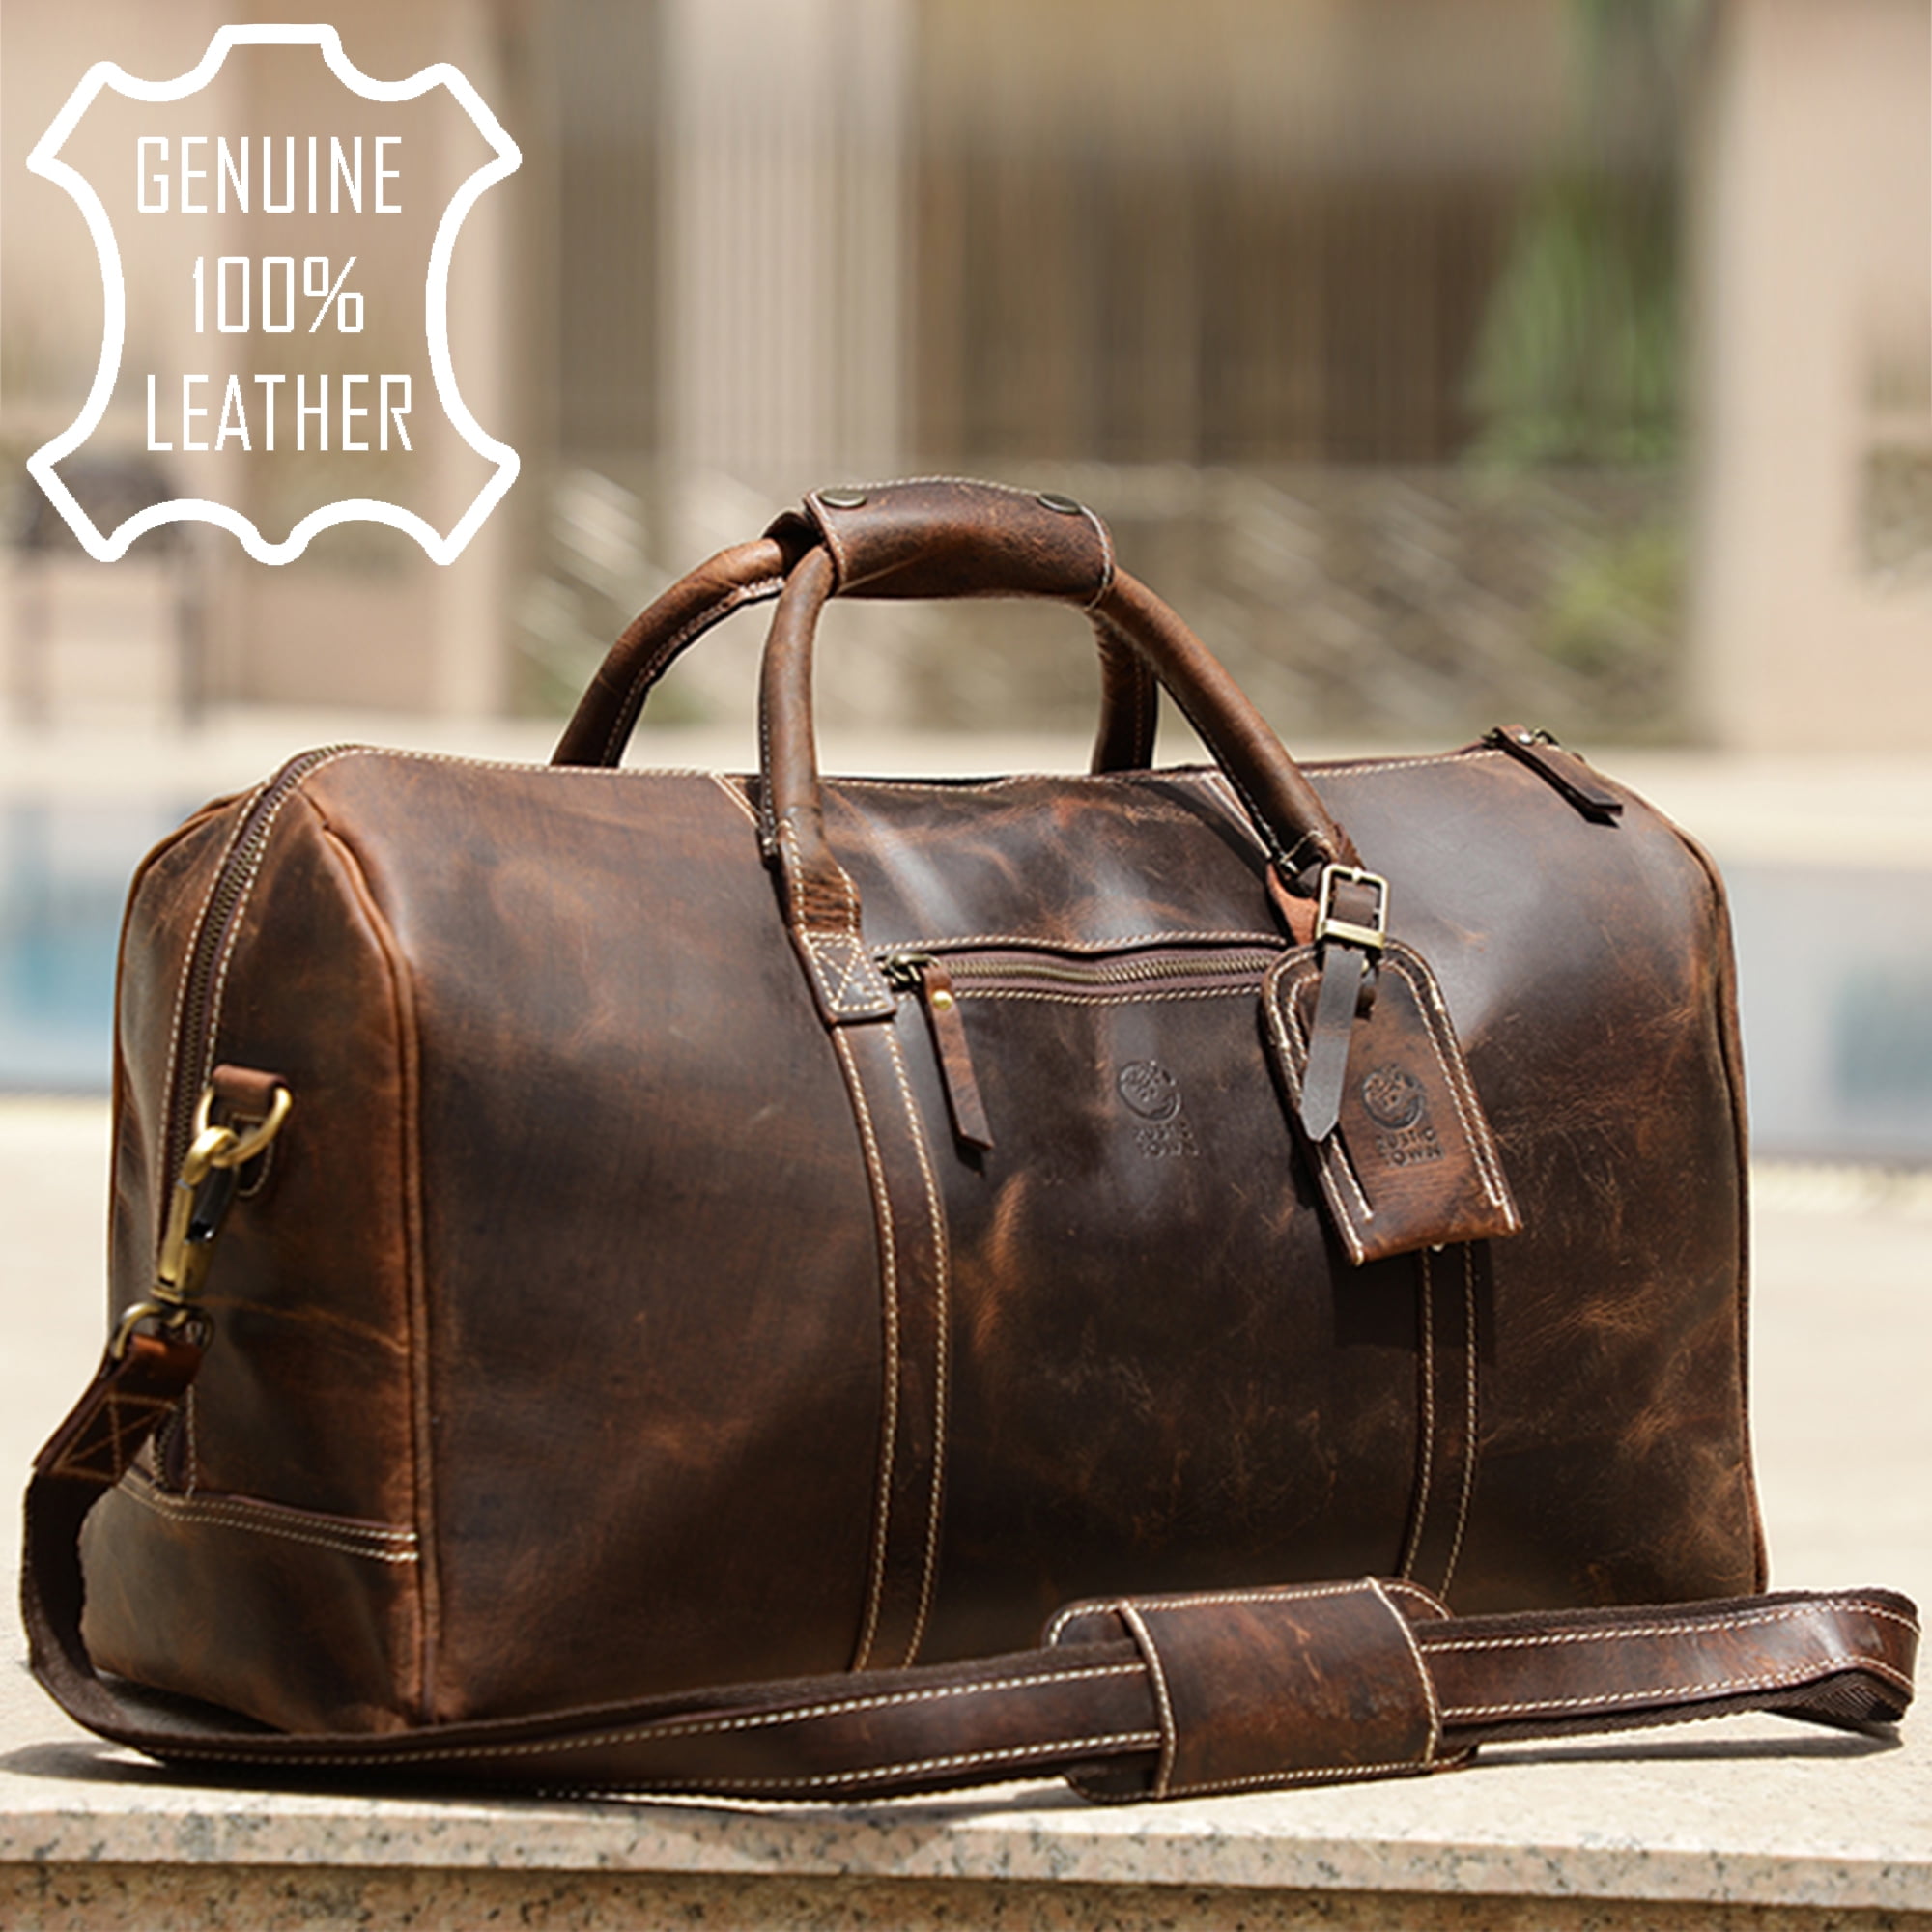 Good quaity Leather large vintage duffle travel gym weekend overnight bag 